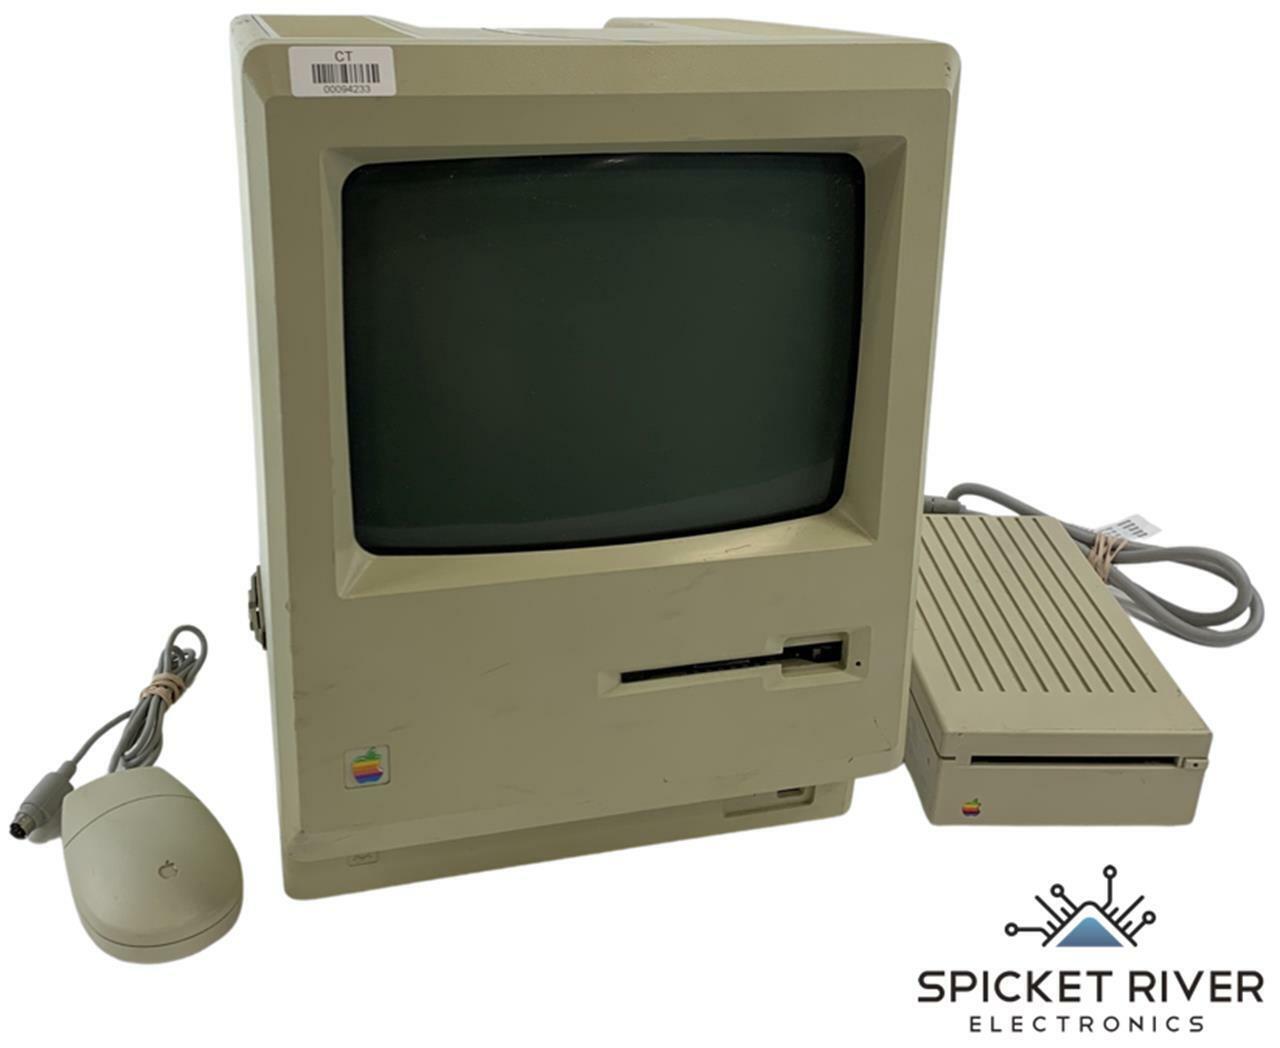 Apple Macintosh Plus 1Mb M0001A 8MHz 128K RAM No HDD + M2706 Mouse A9M0106 Drive